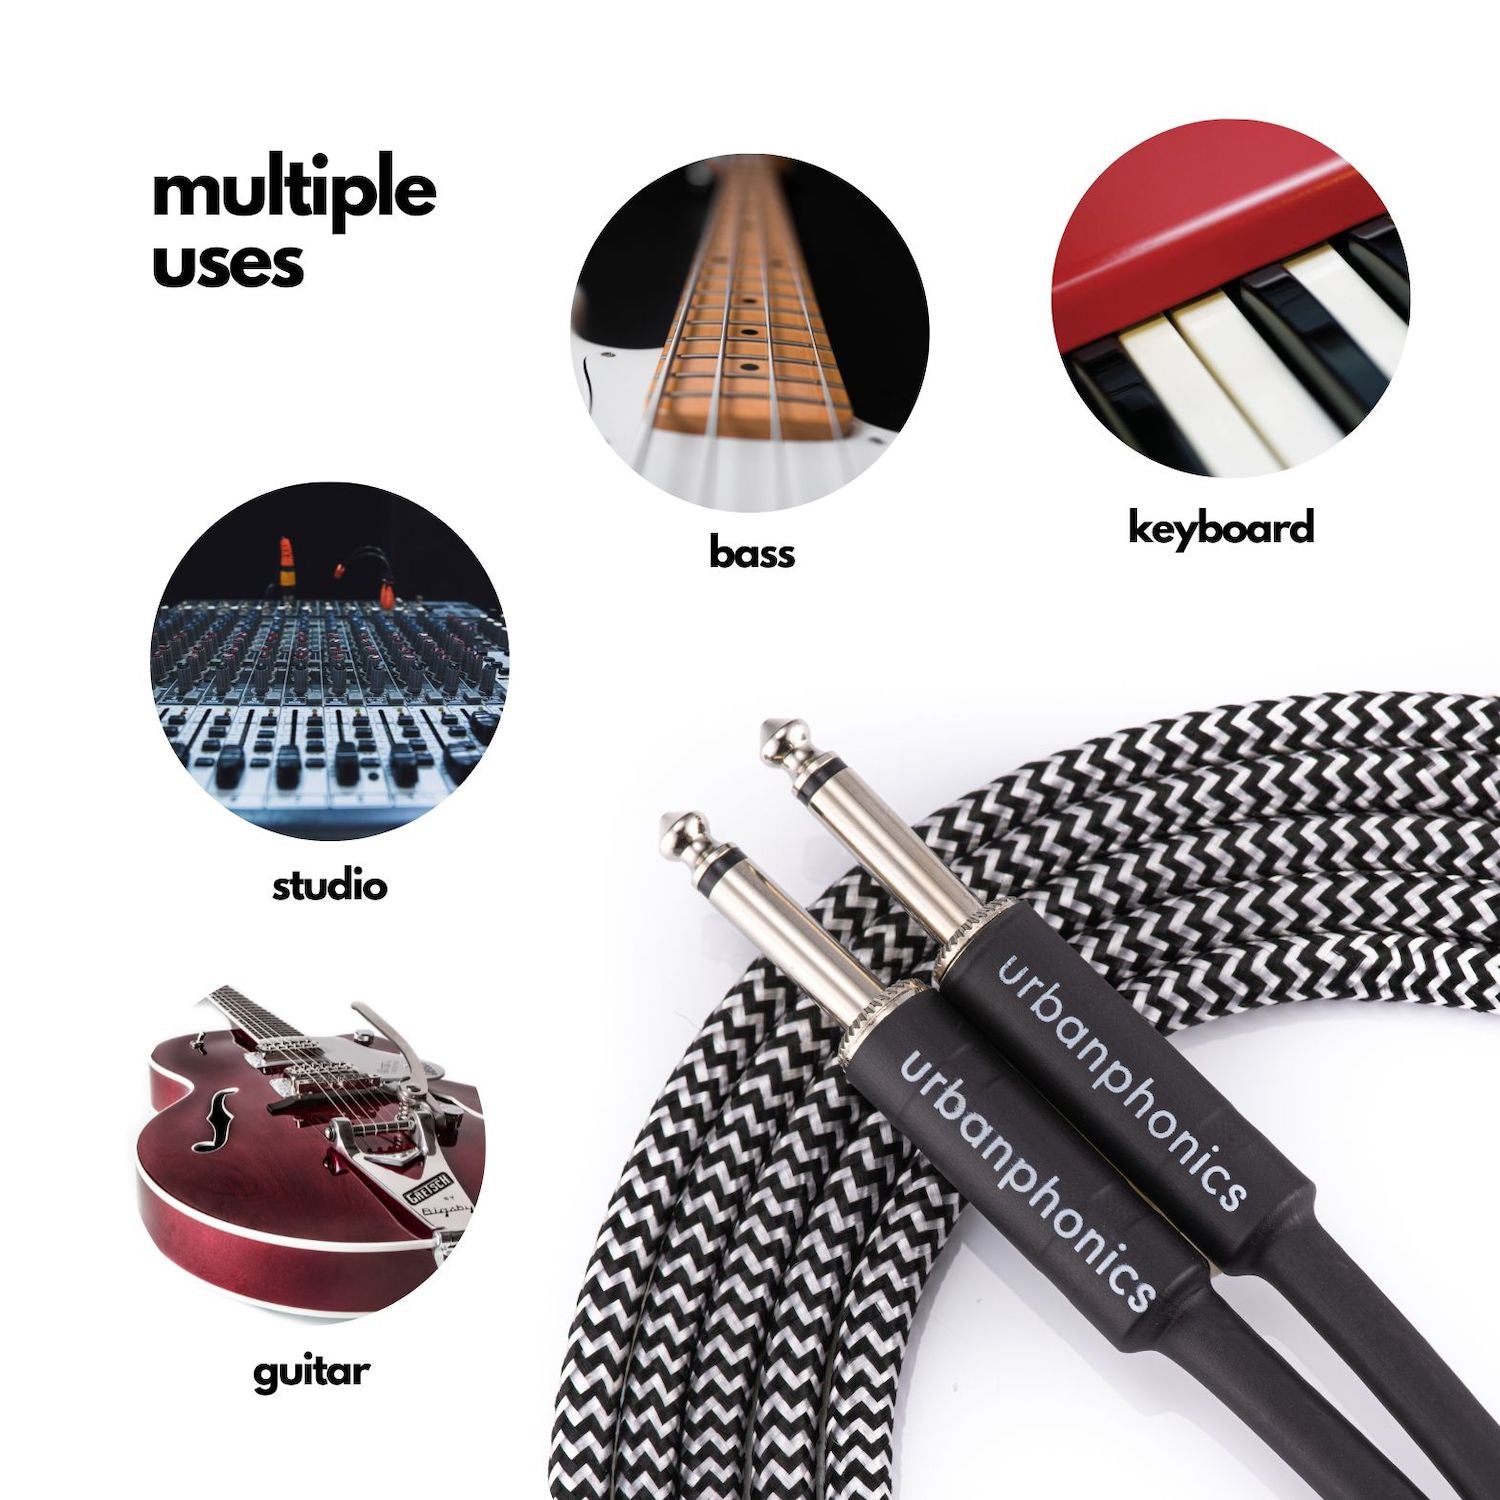 Urbanphonics Instrument Cable - Black & White Tweed